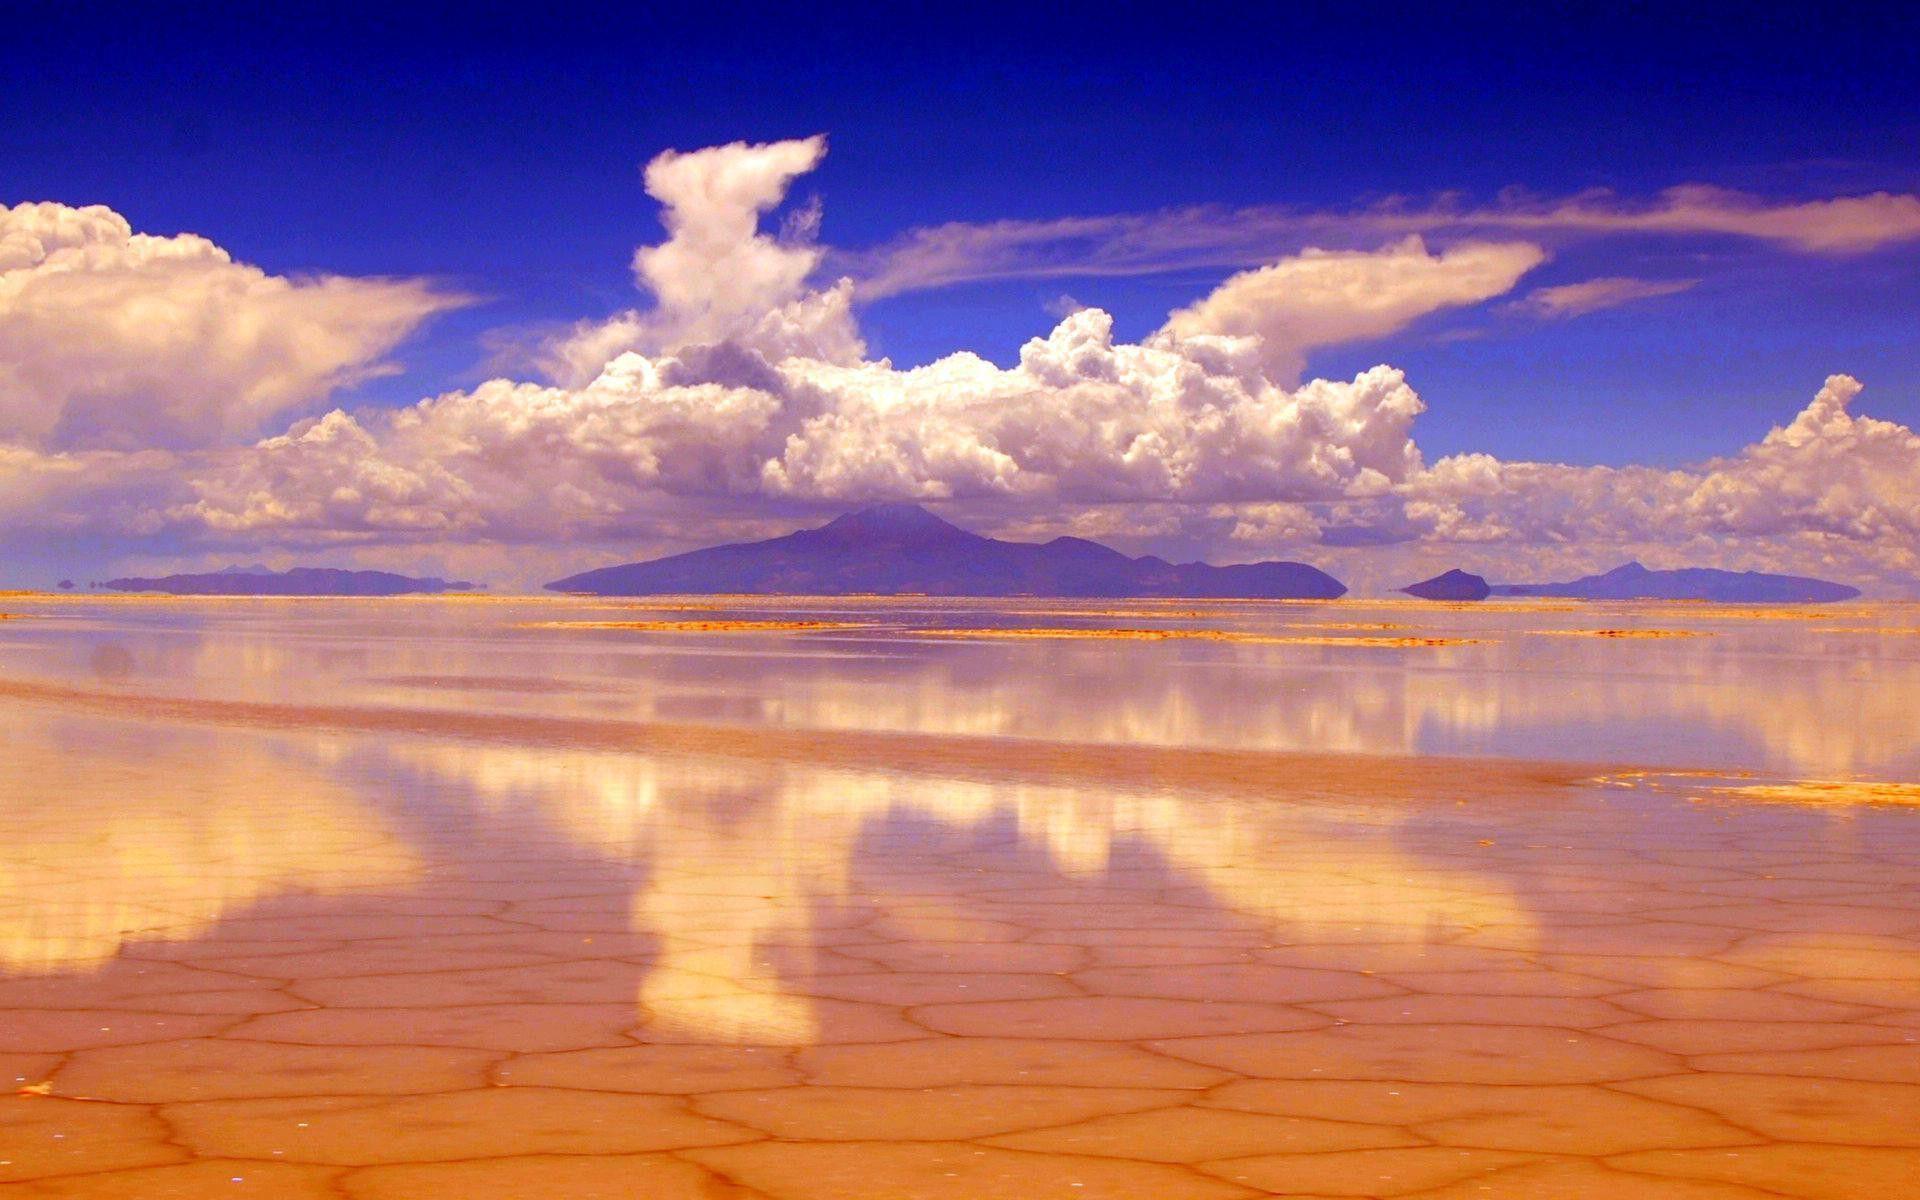 Salar de Uyuni Salt pan Reflection in Bolivia Wallpaper free